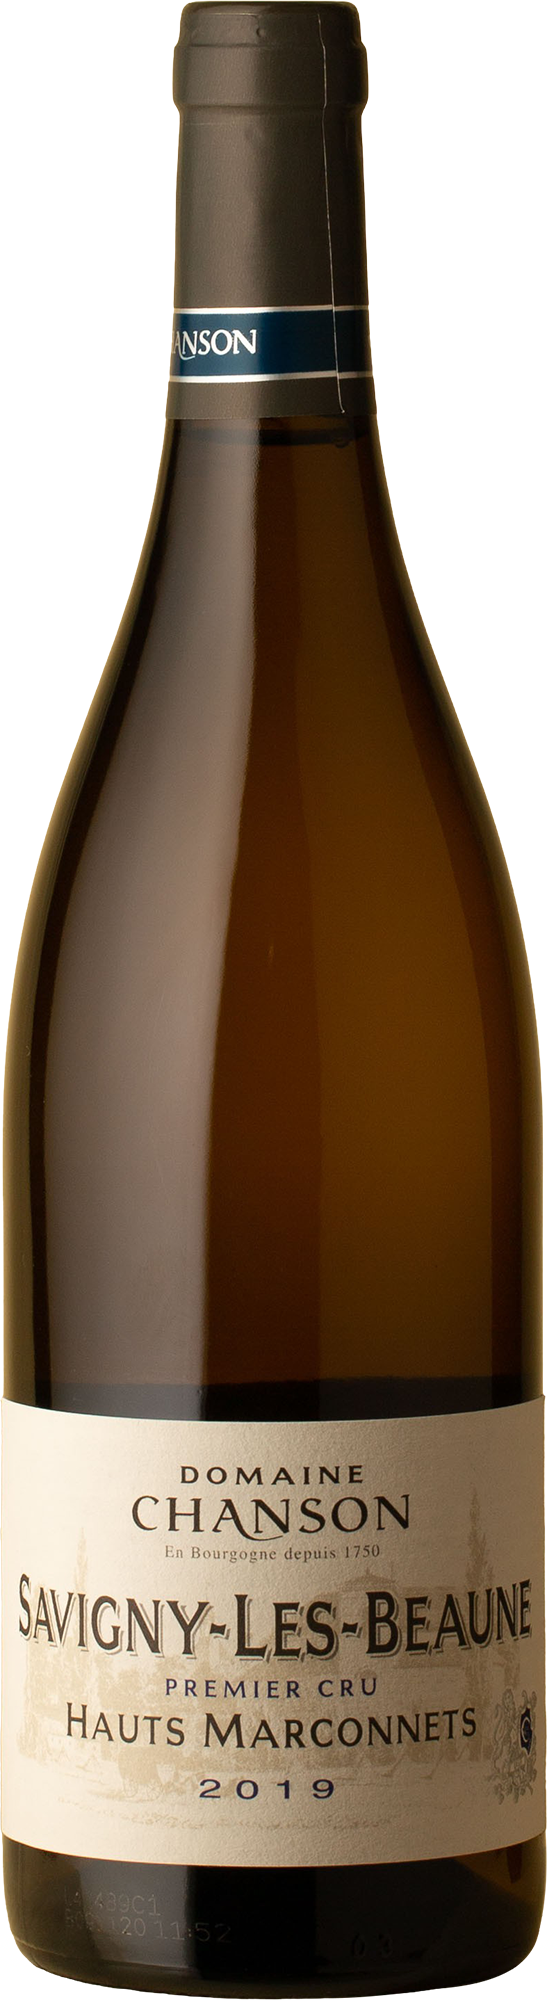 Chanson - Savigny-Les-Beaune Premier Cru Hauts Marconnet Chardonnay 2019 White Wine